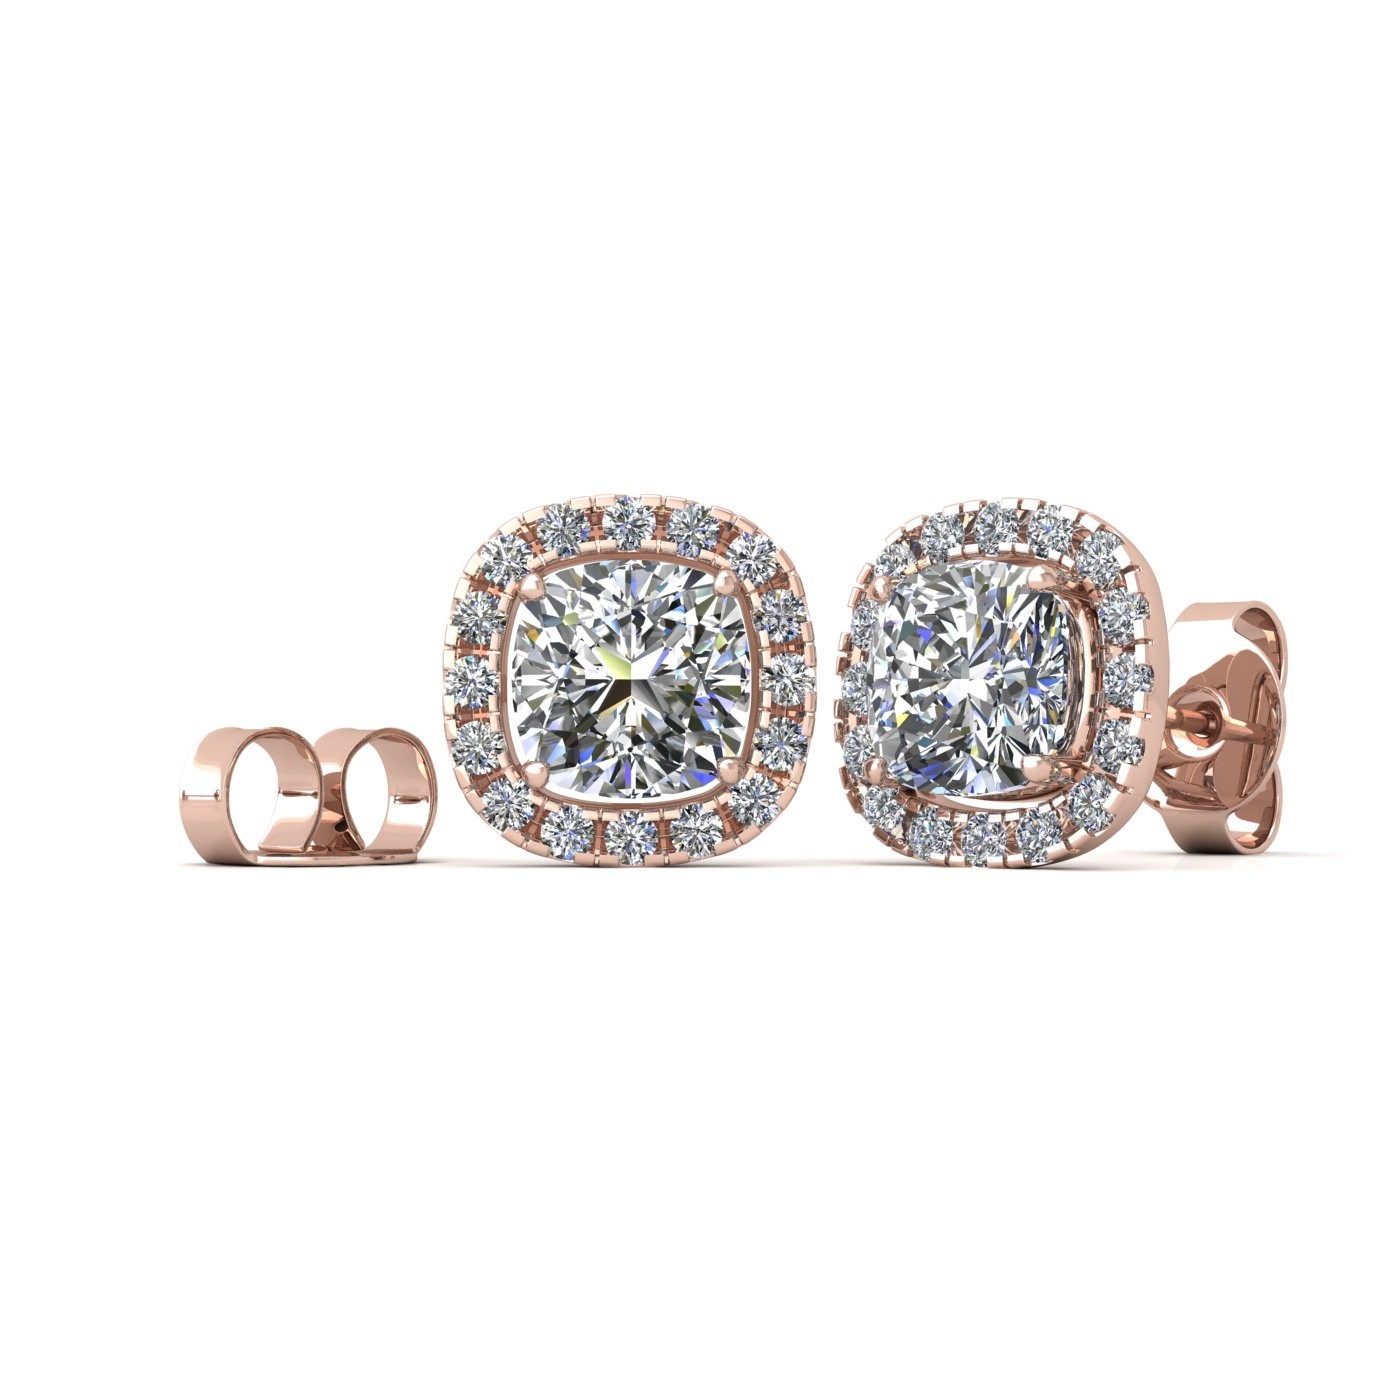 18k white gold 0,3 ct each (0,6 tcw) 4 prongs cushion shape diamond earrings with diamond pavÉ set halo Photos & images